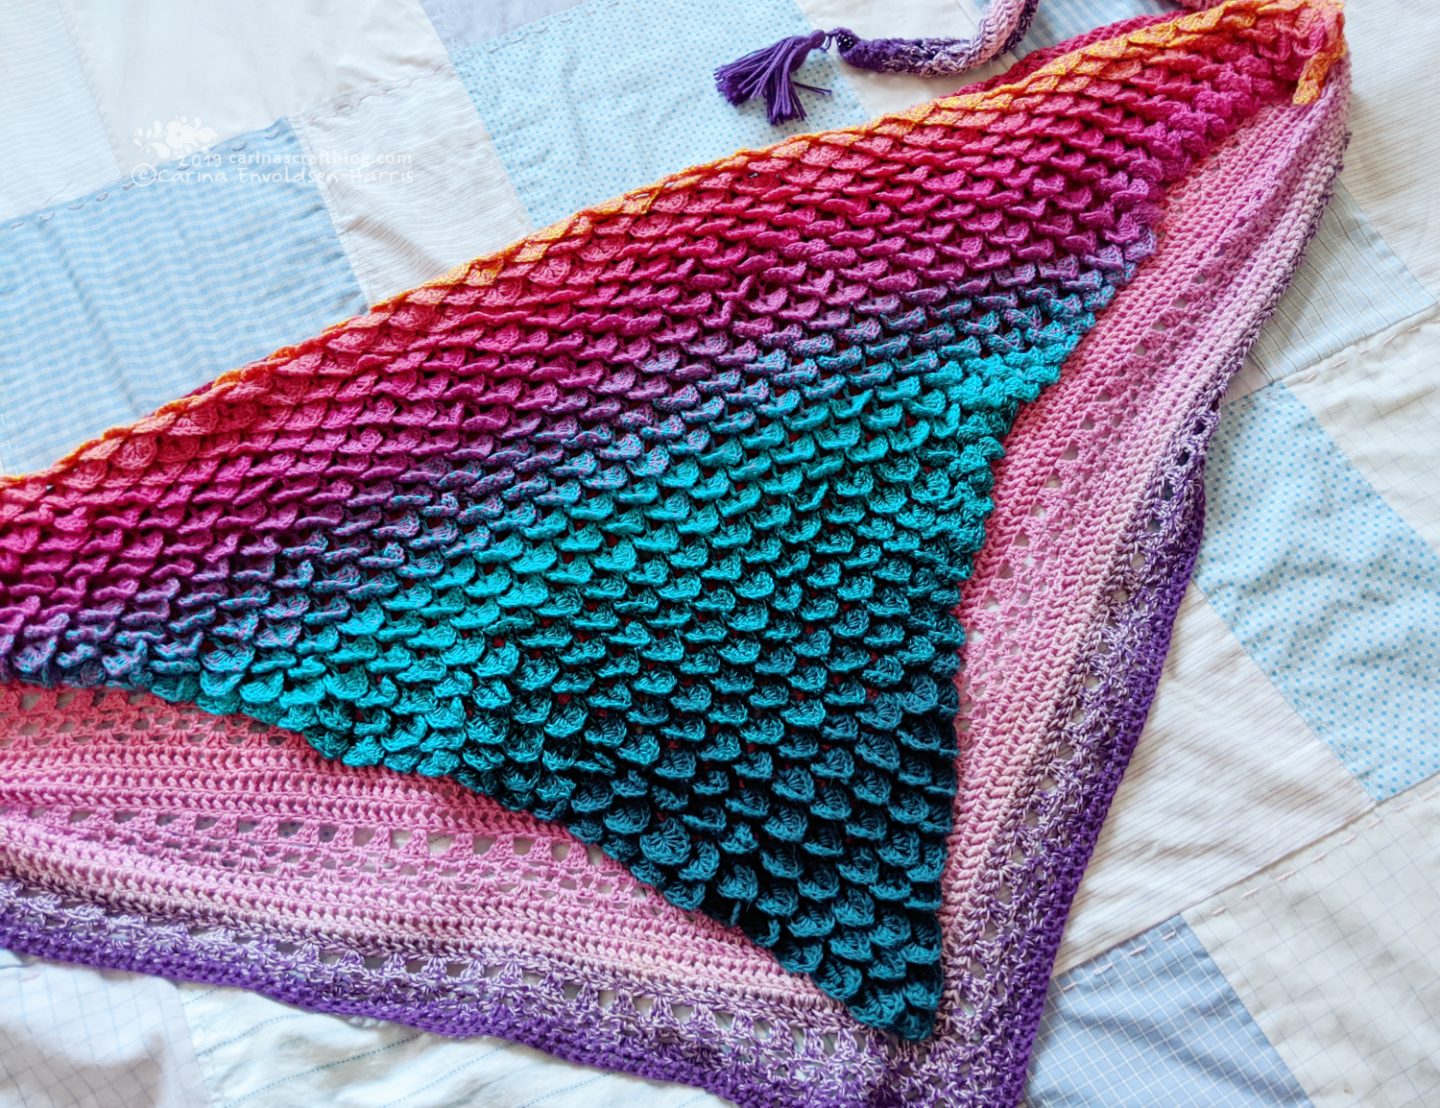 Crocodile scale scarf on top of stripe effect shawl.